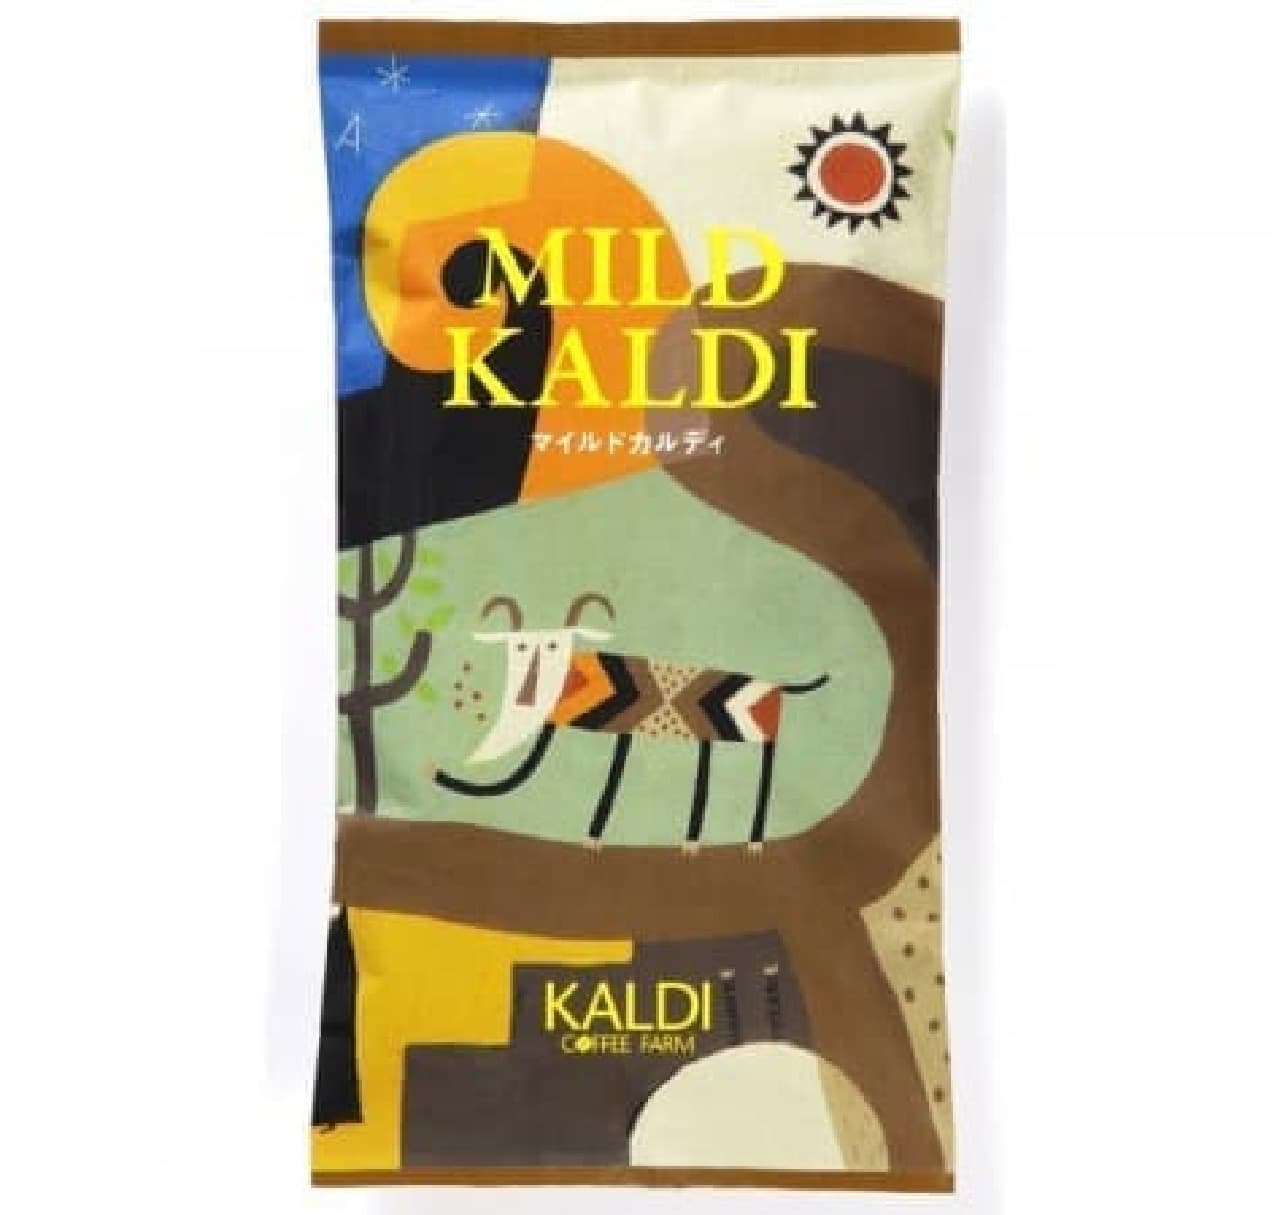 KALDI Coffee Farm "Spring Coffee Bag"